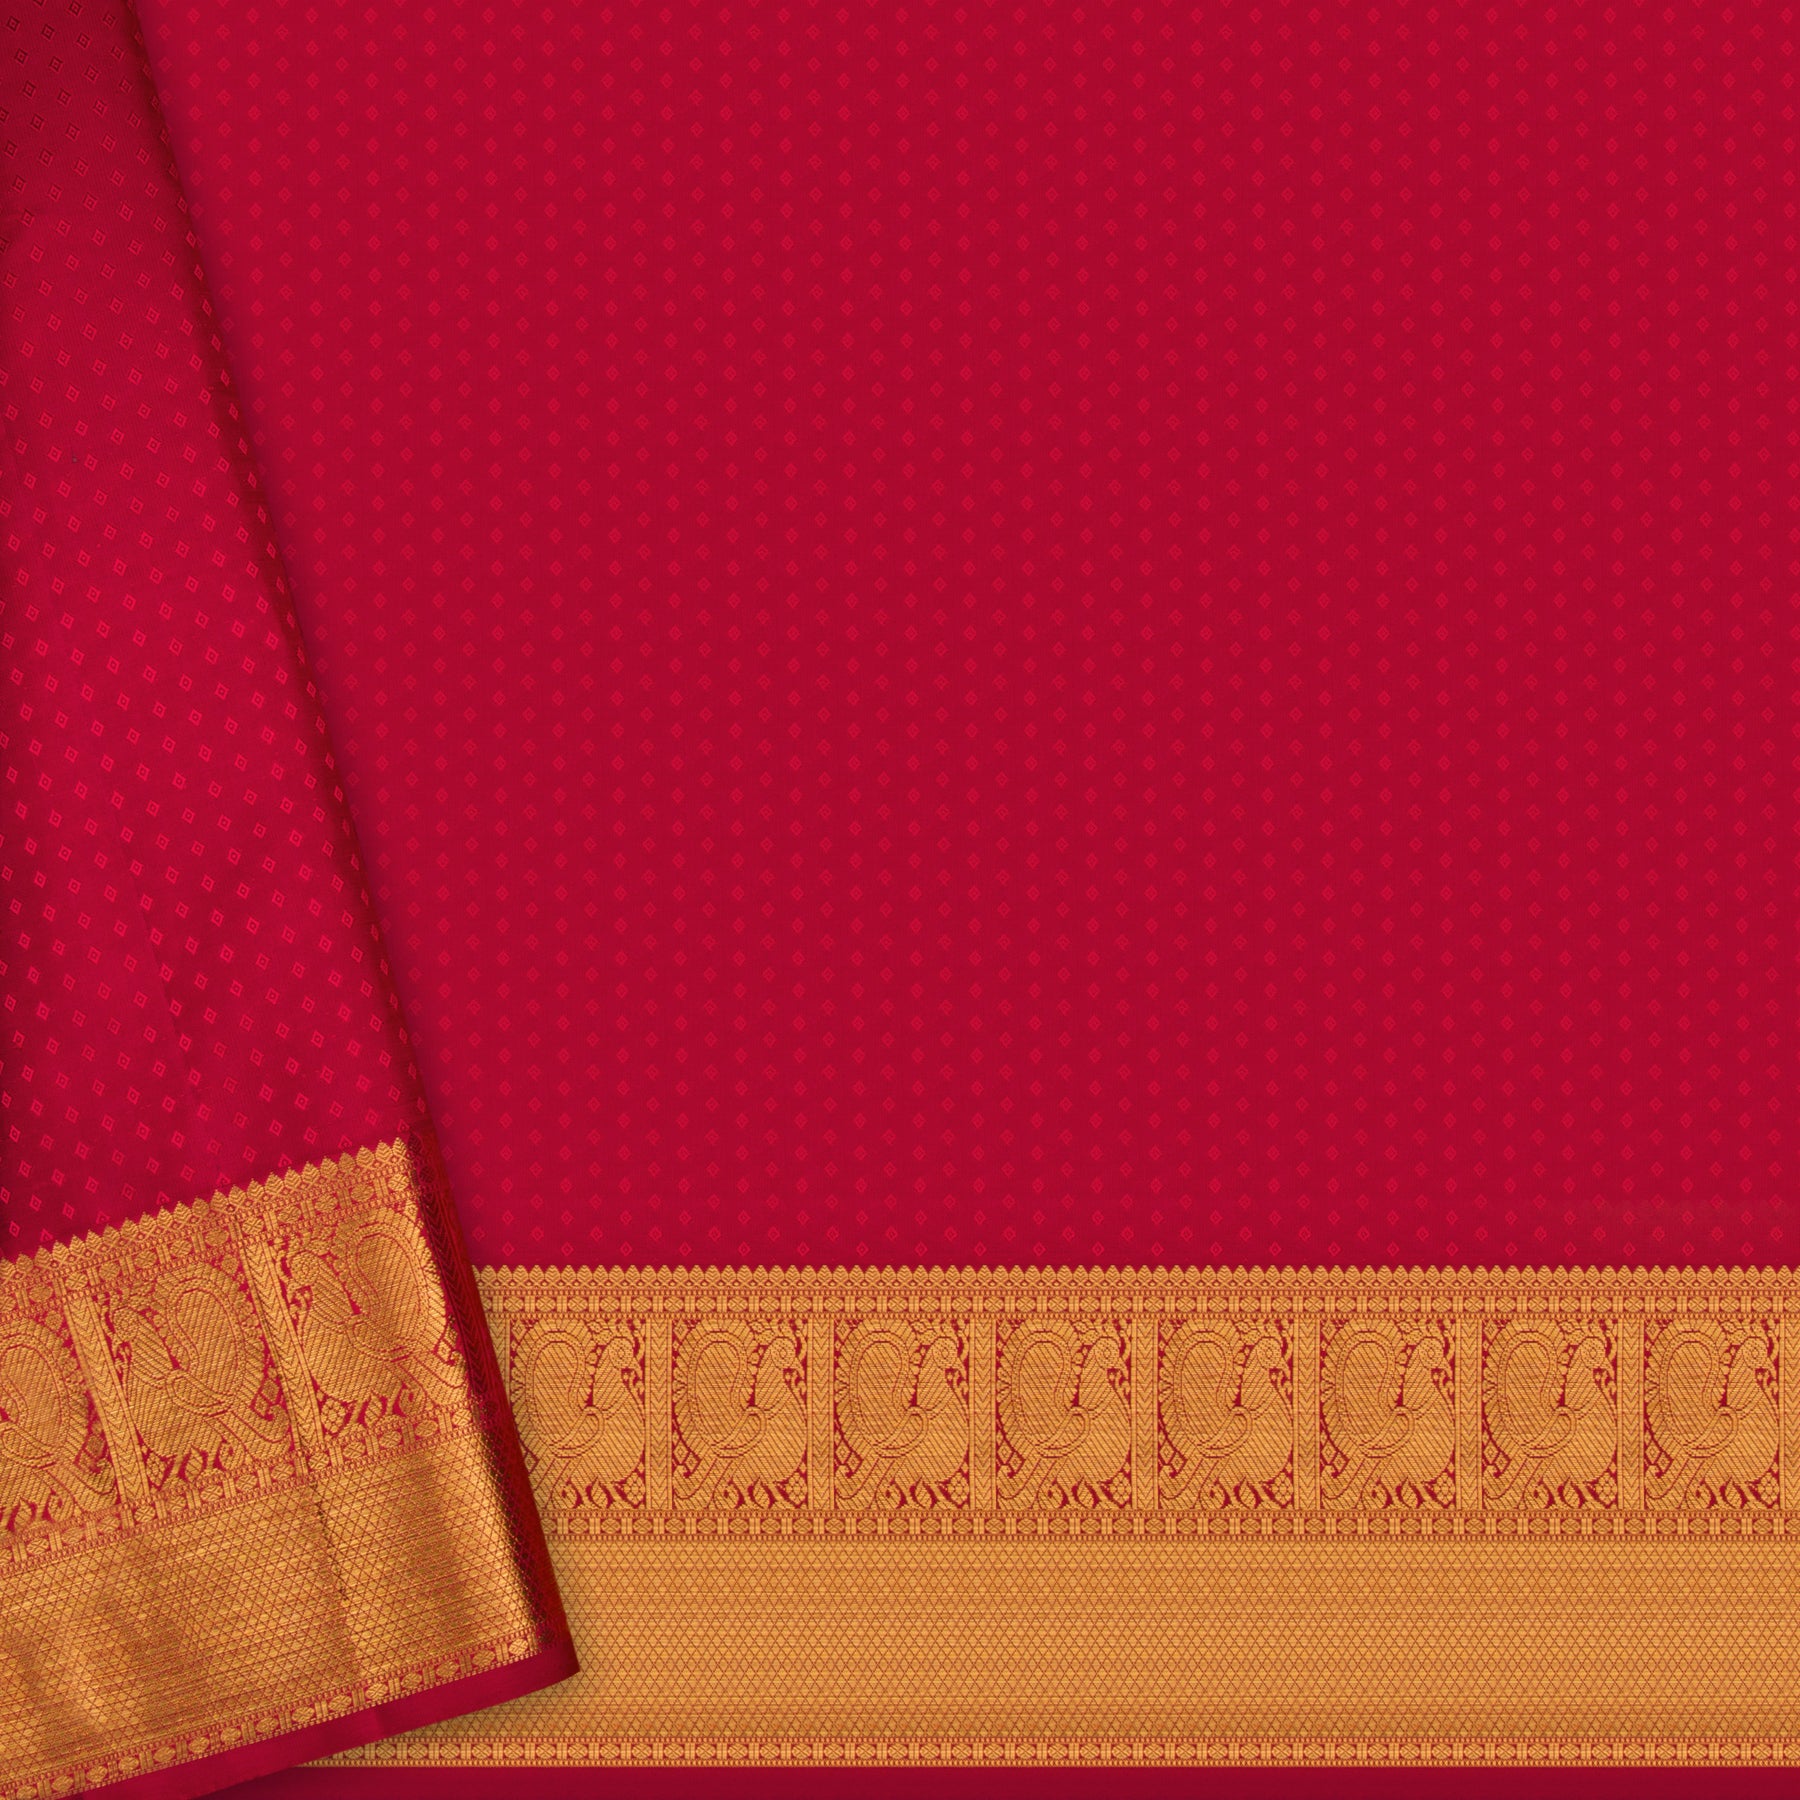 Kanakavalli Kanjivaram Silk Sari 22-110-HS001-08569 - Blouse View